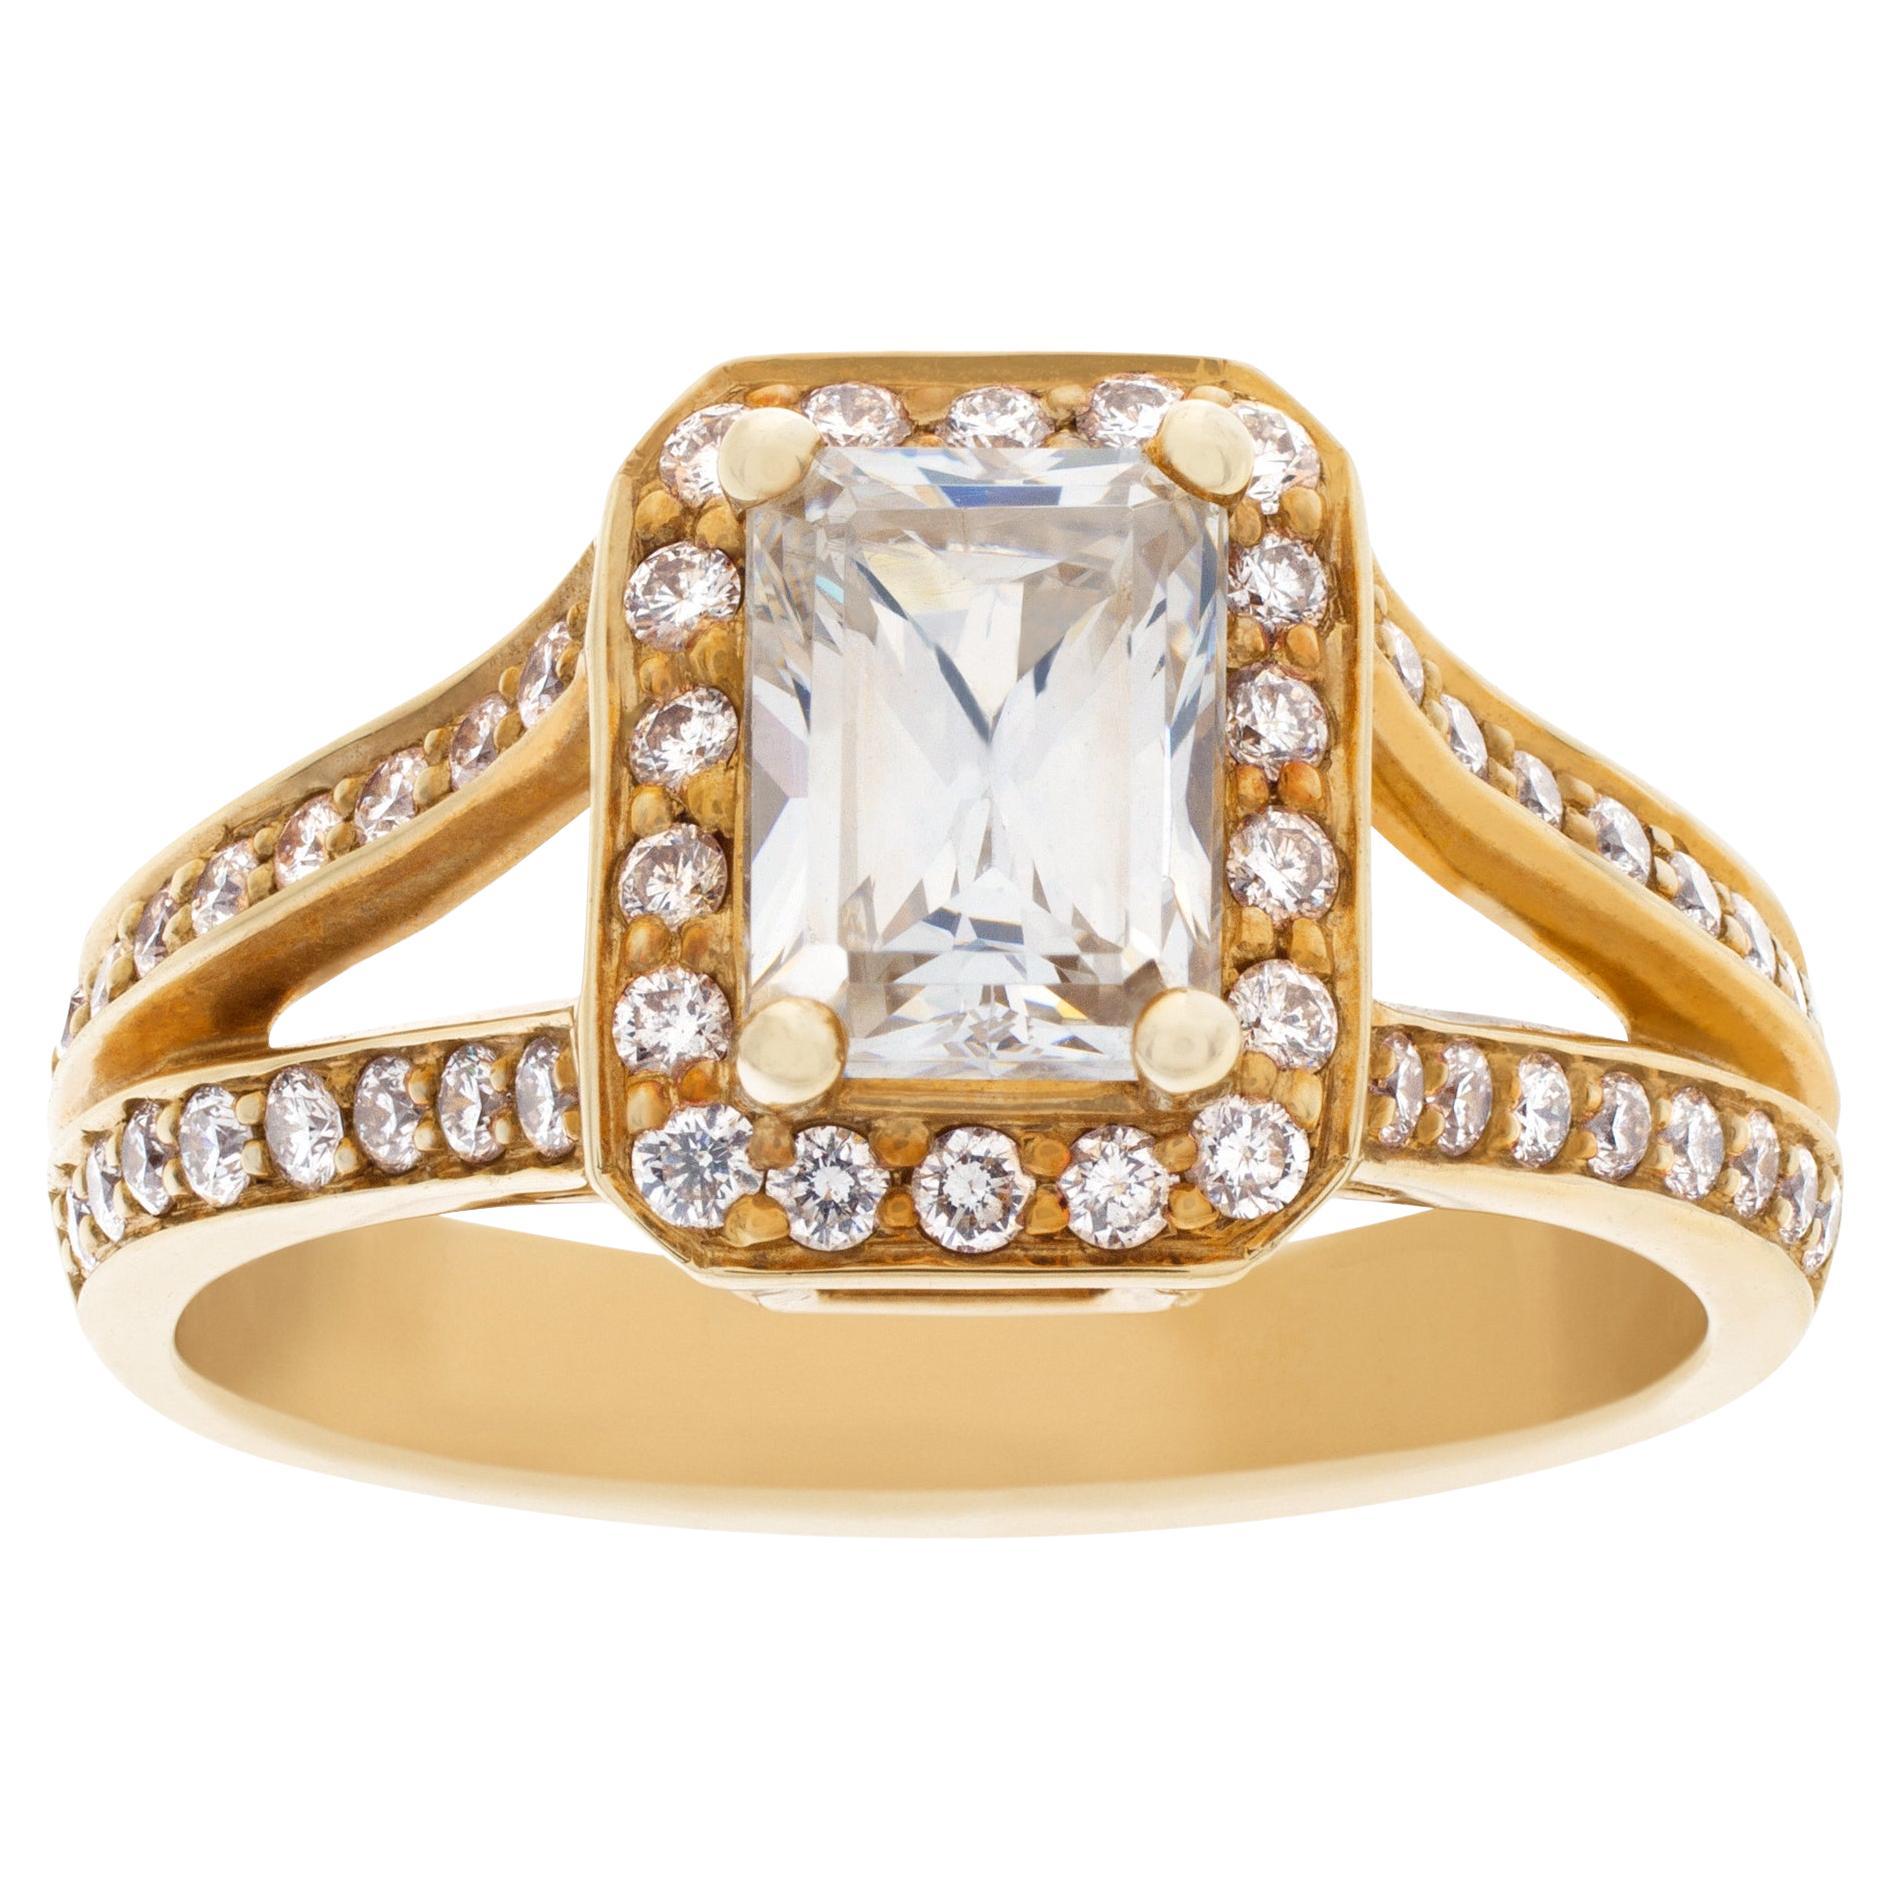 Diamond Ring in 14k Yellow Gold Setting, 0.64 Cts in Diamonds